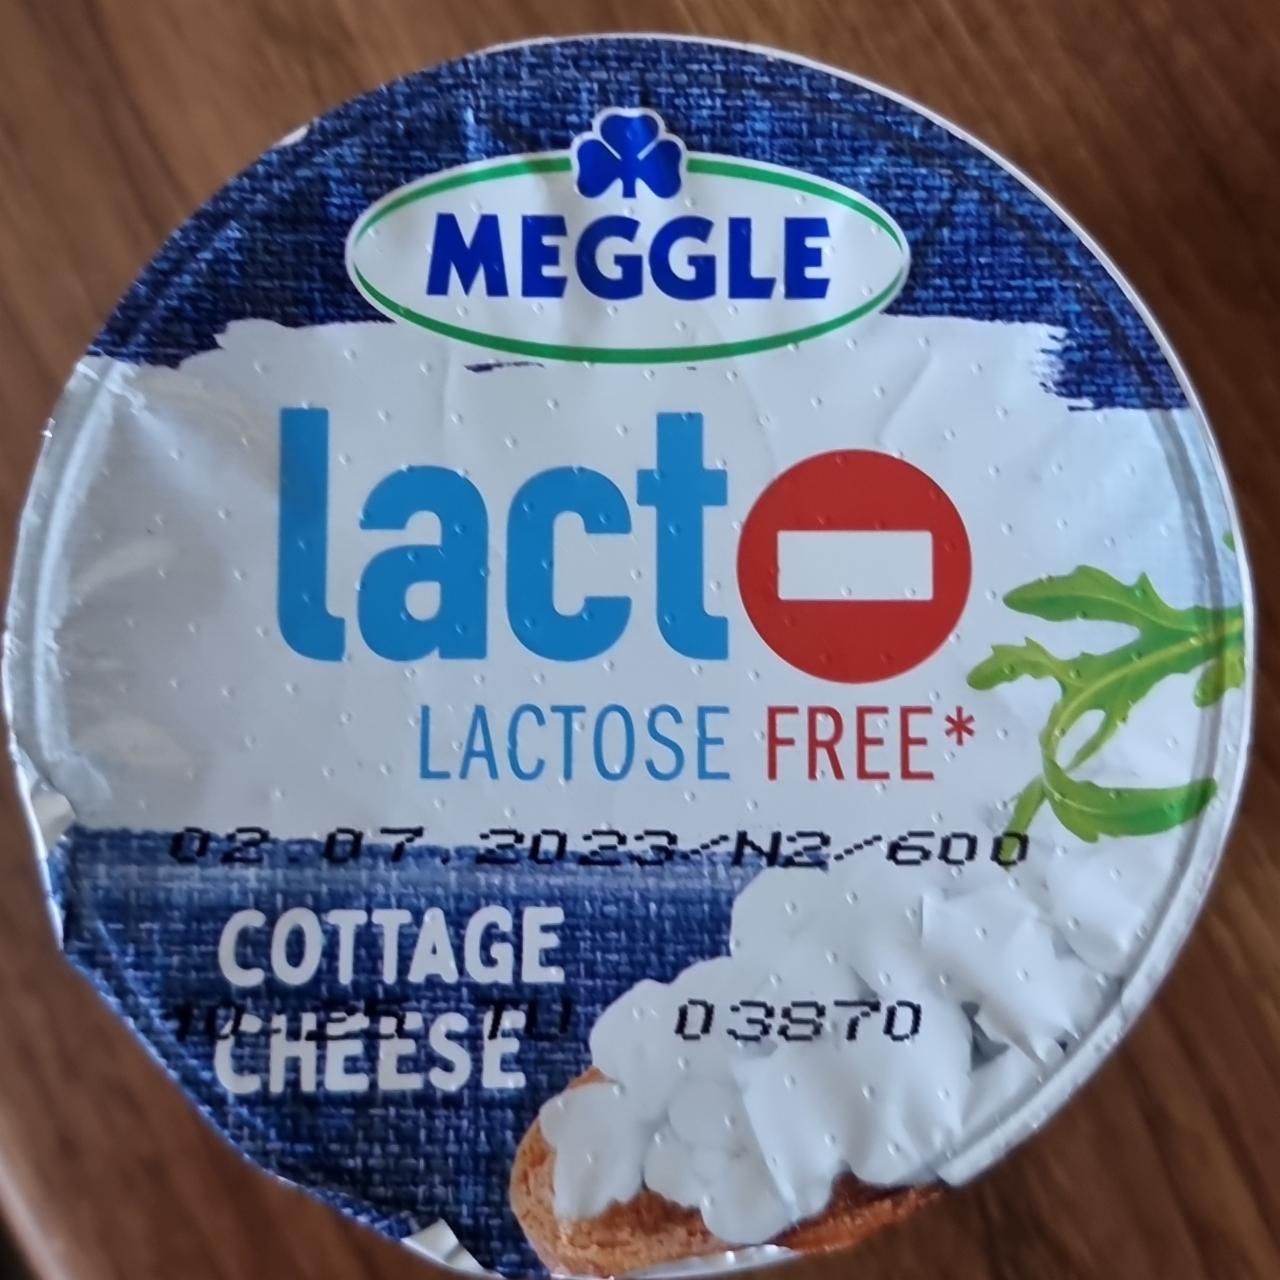 Fotografie - Lacto- Lactose free Cottage Cheese Meggle